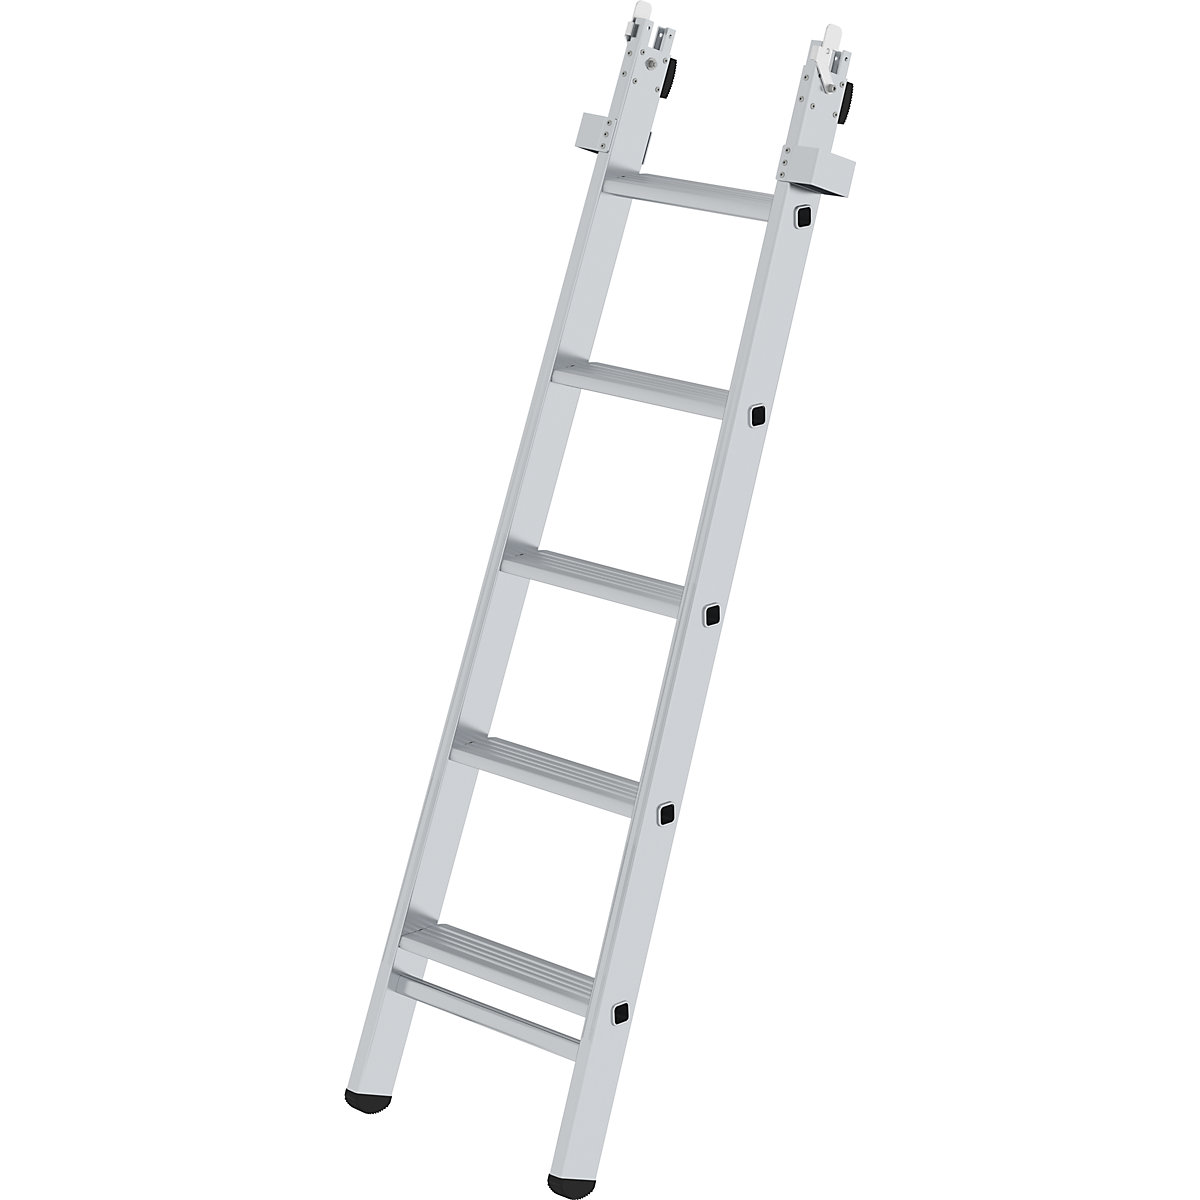 Glass cleaner step ladder - MUNK